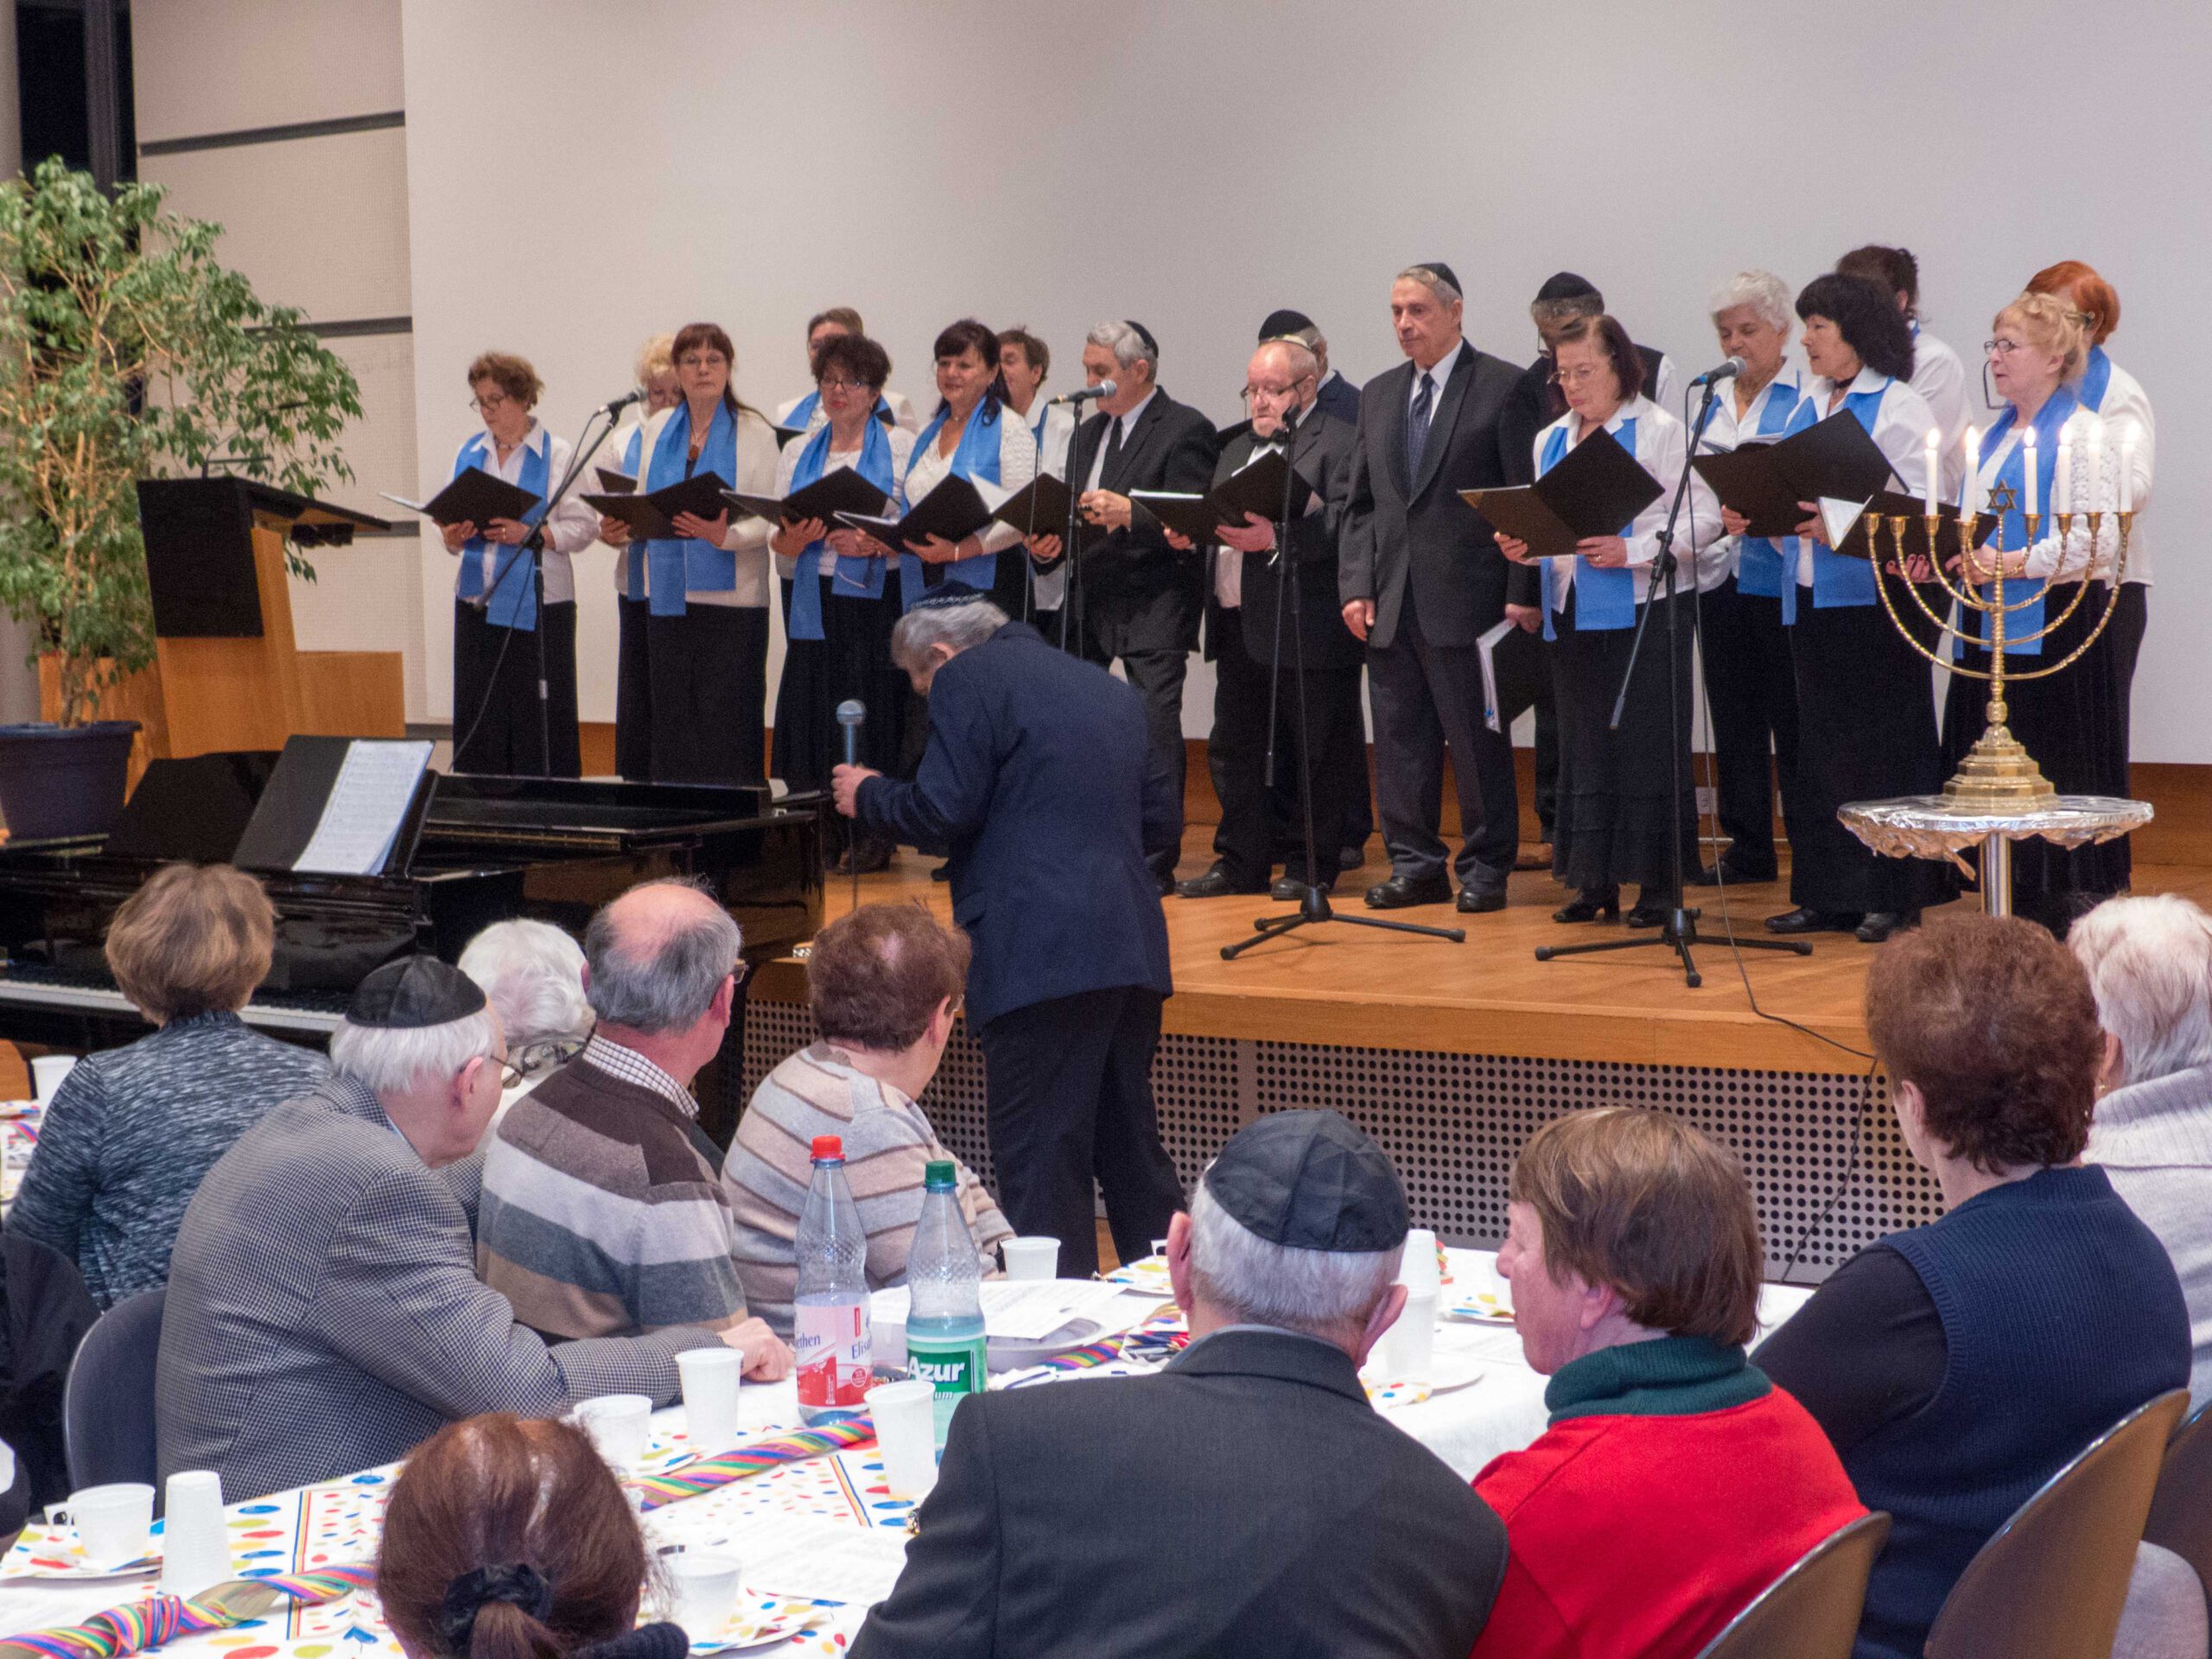 Choir of the Jewish community of Wiesbaden. Photographer: Igor Eisenschtat. Collection Jewish Community Wiesbaden